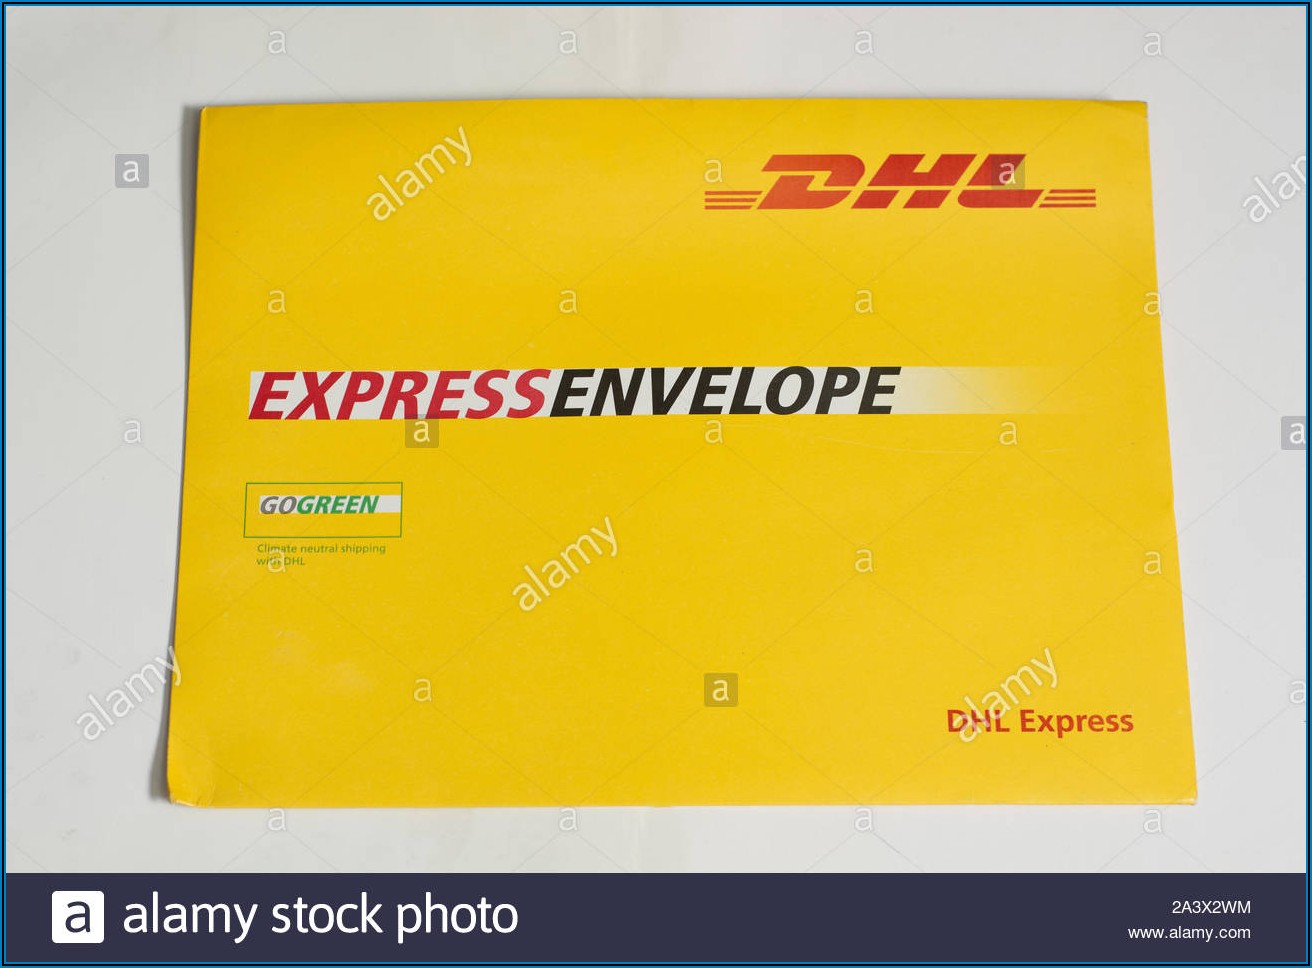 Dhl Express Envelope Size